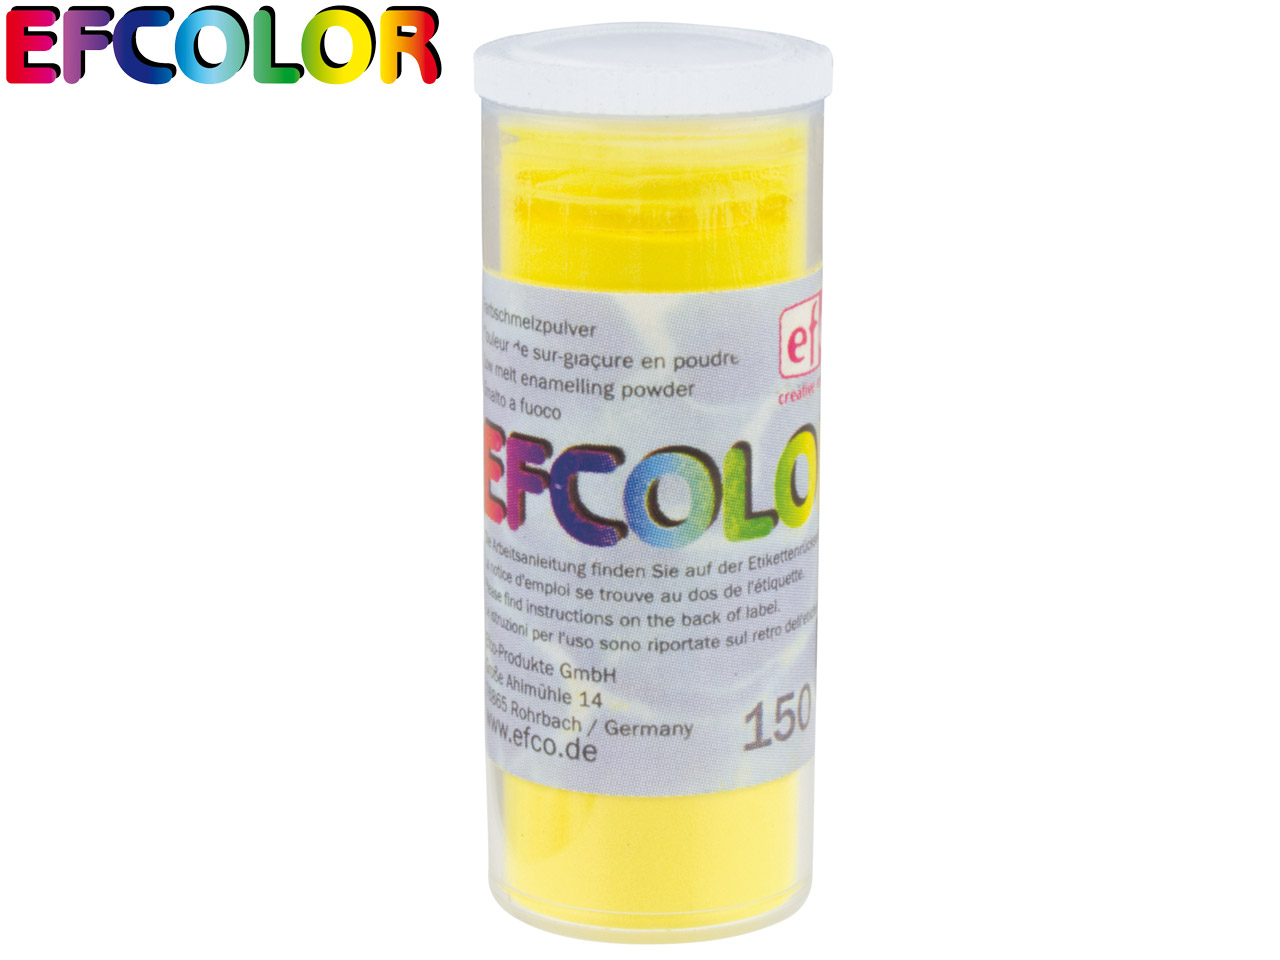 Efcolor Enamel Yellow 10ml - Standard Image - 2